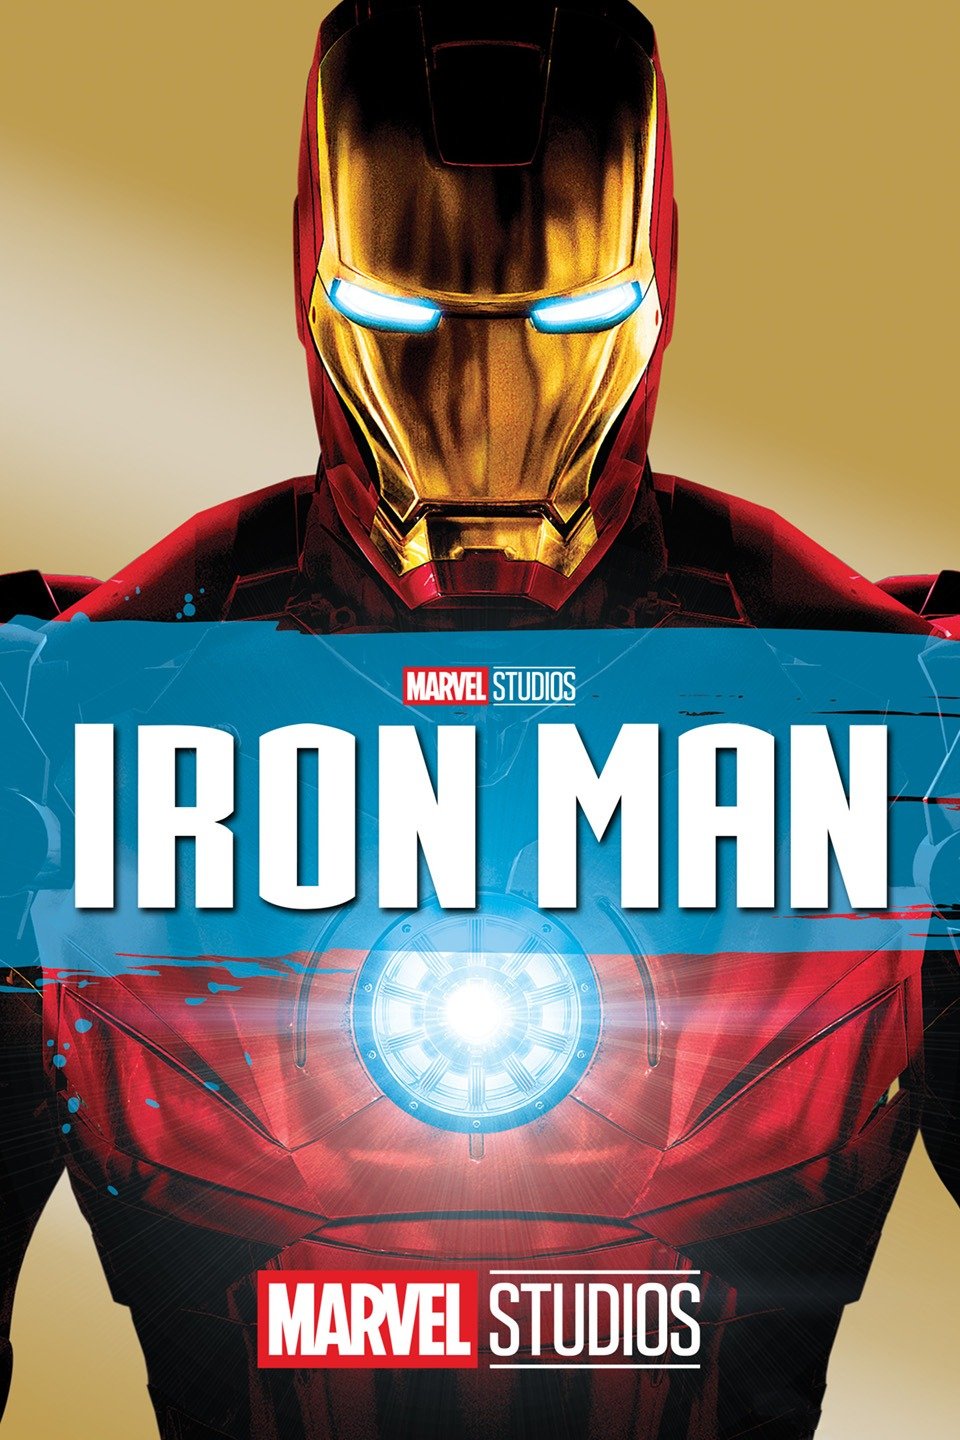 [MINI Super-HQ] Iron Man (2008) มหาประลัยคนเกราะเหล็ก ภาค 1 [1080P] [พากย์ไทย 5.1 + อังกฤษ DTS] [BluRay.DTS.x264] [บรรยายไทย + อังกฤษ] [เสียงไทย + ซับไทย] [ONE2UP]